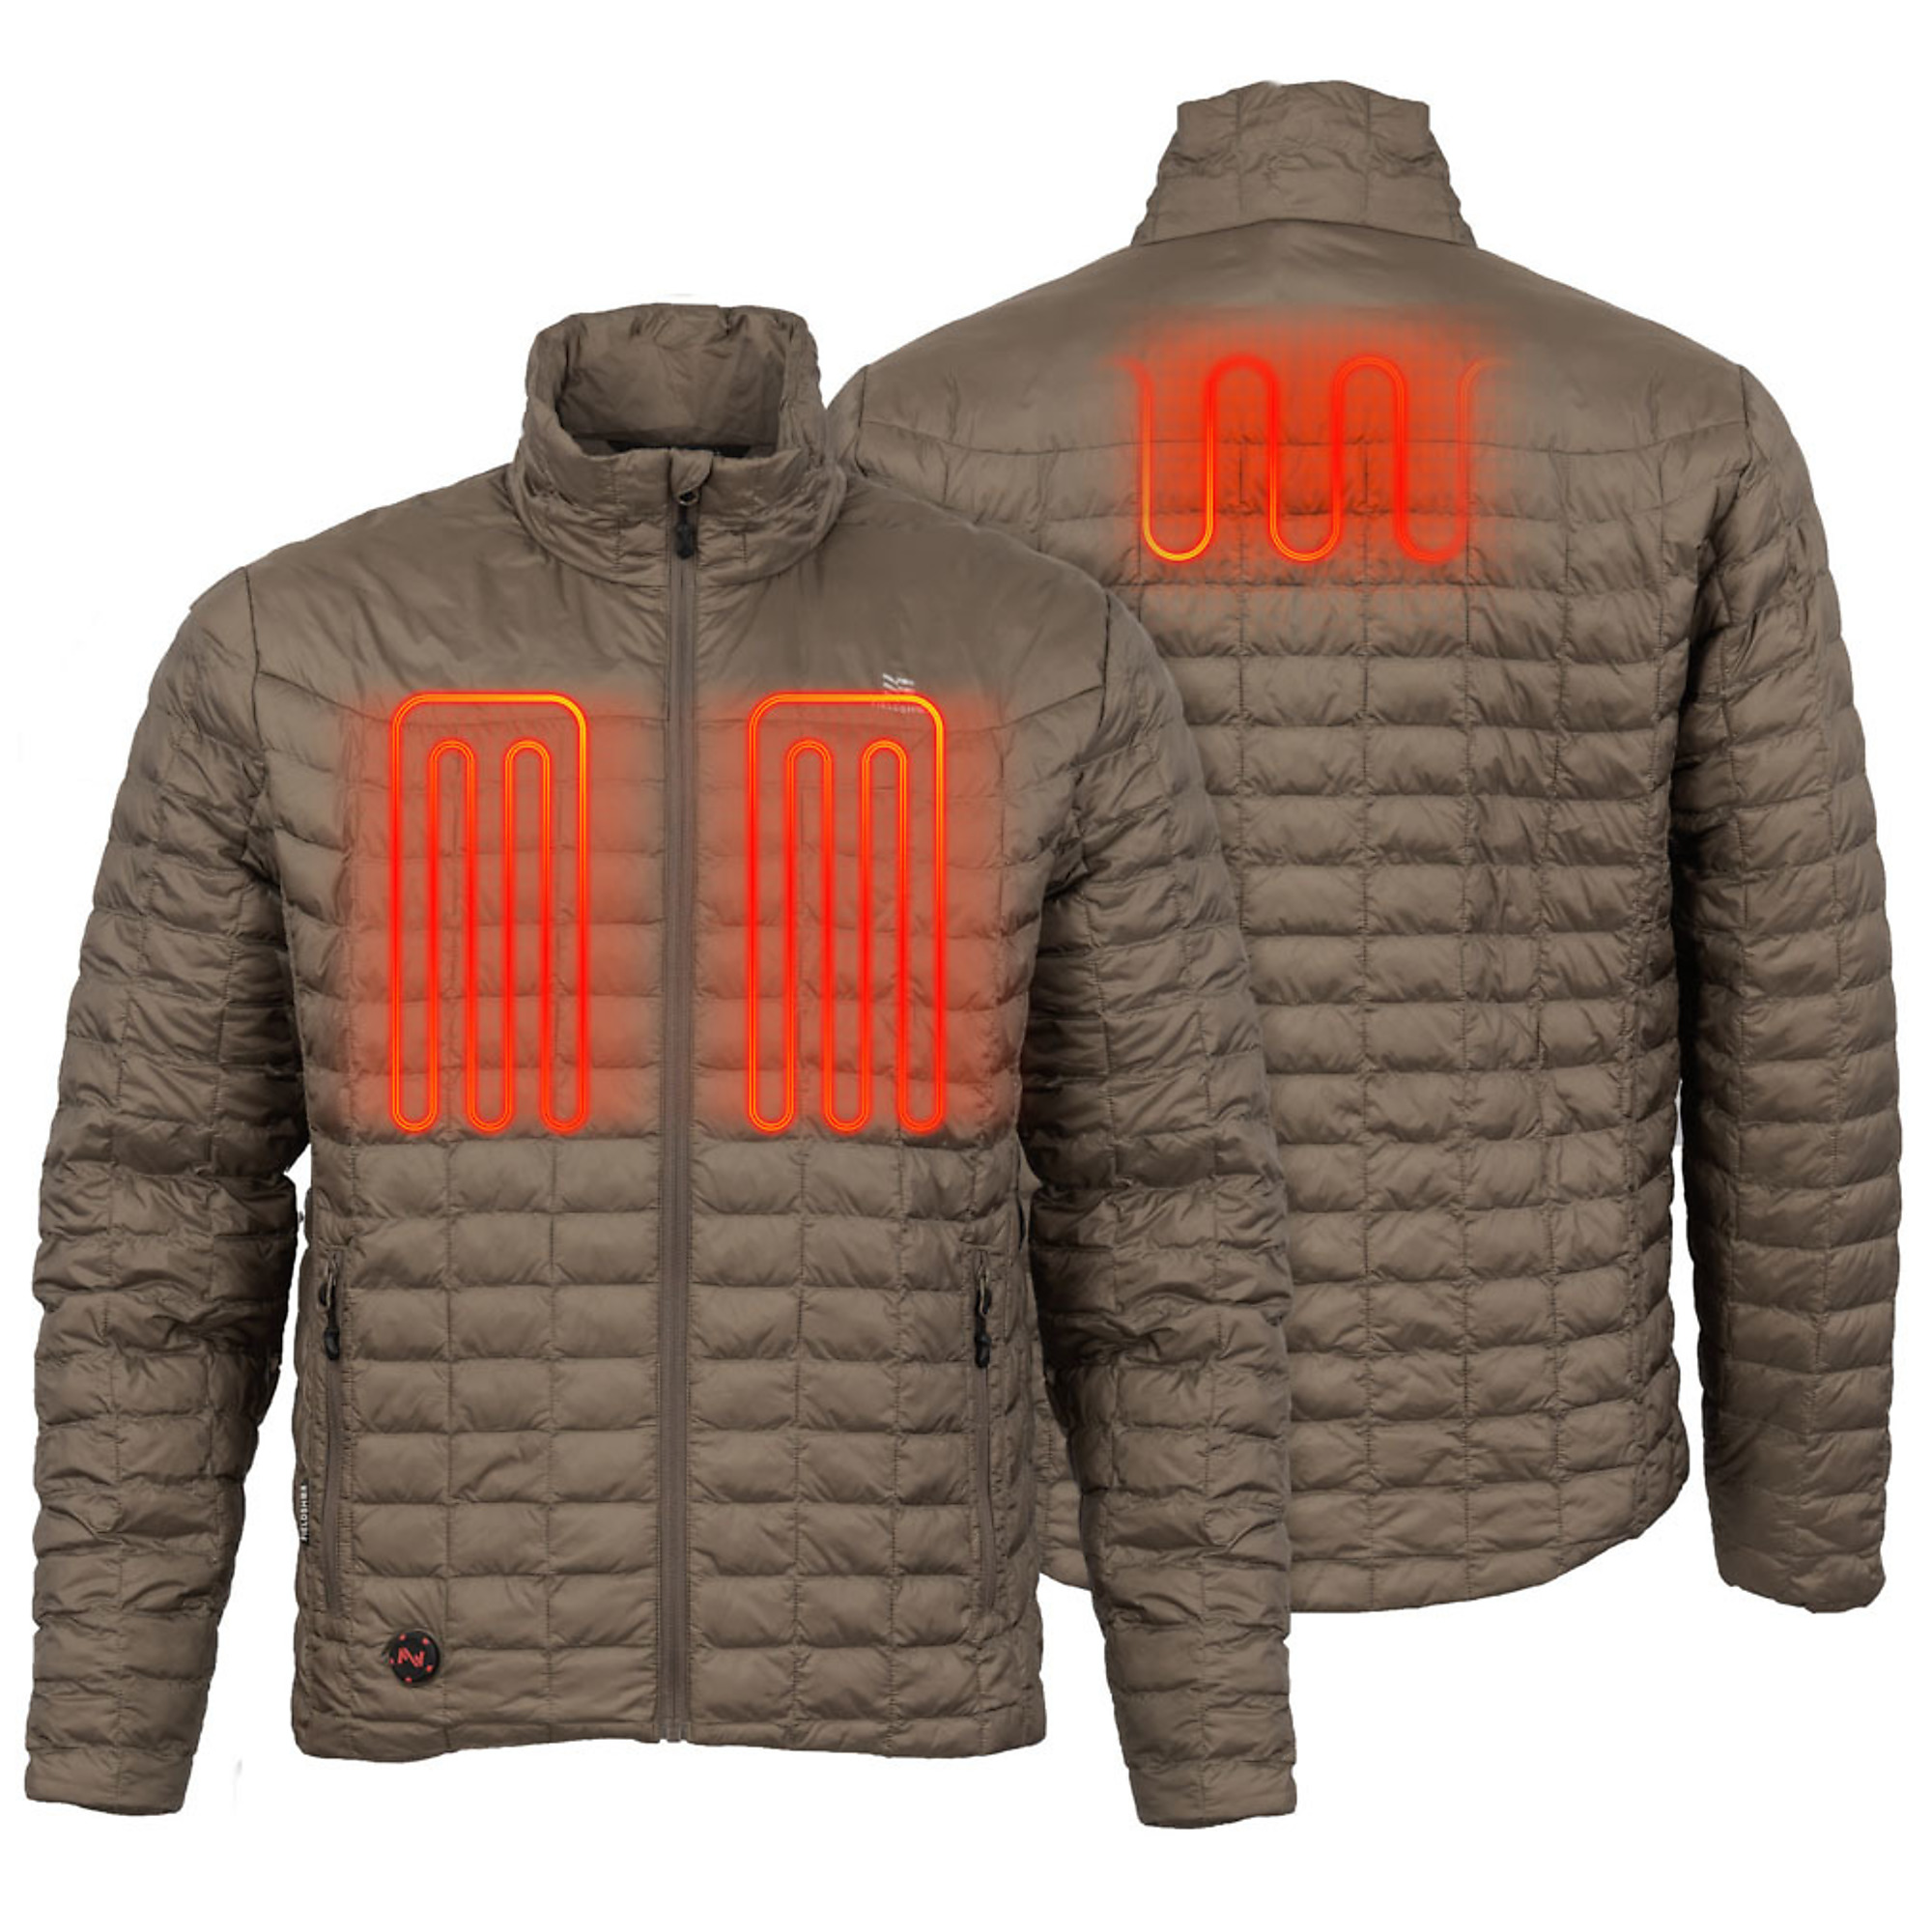 Fieldsheer, Men's Backcountry Heated Jacket with 7.4v Battery, Size S, Color Tan, Model MWMJ04340221